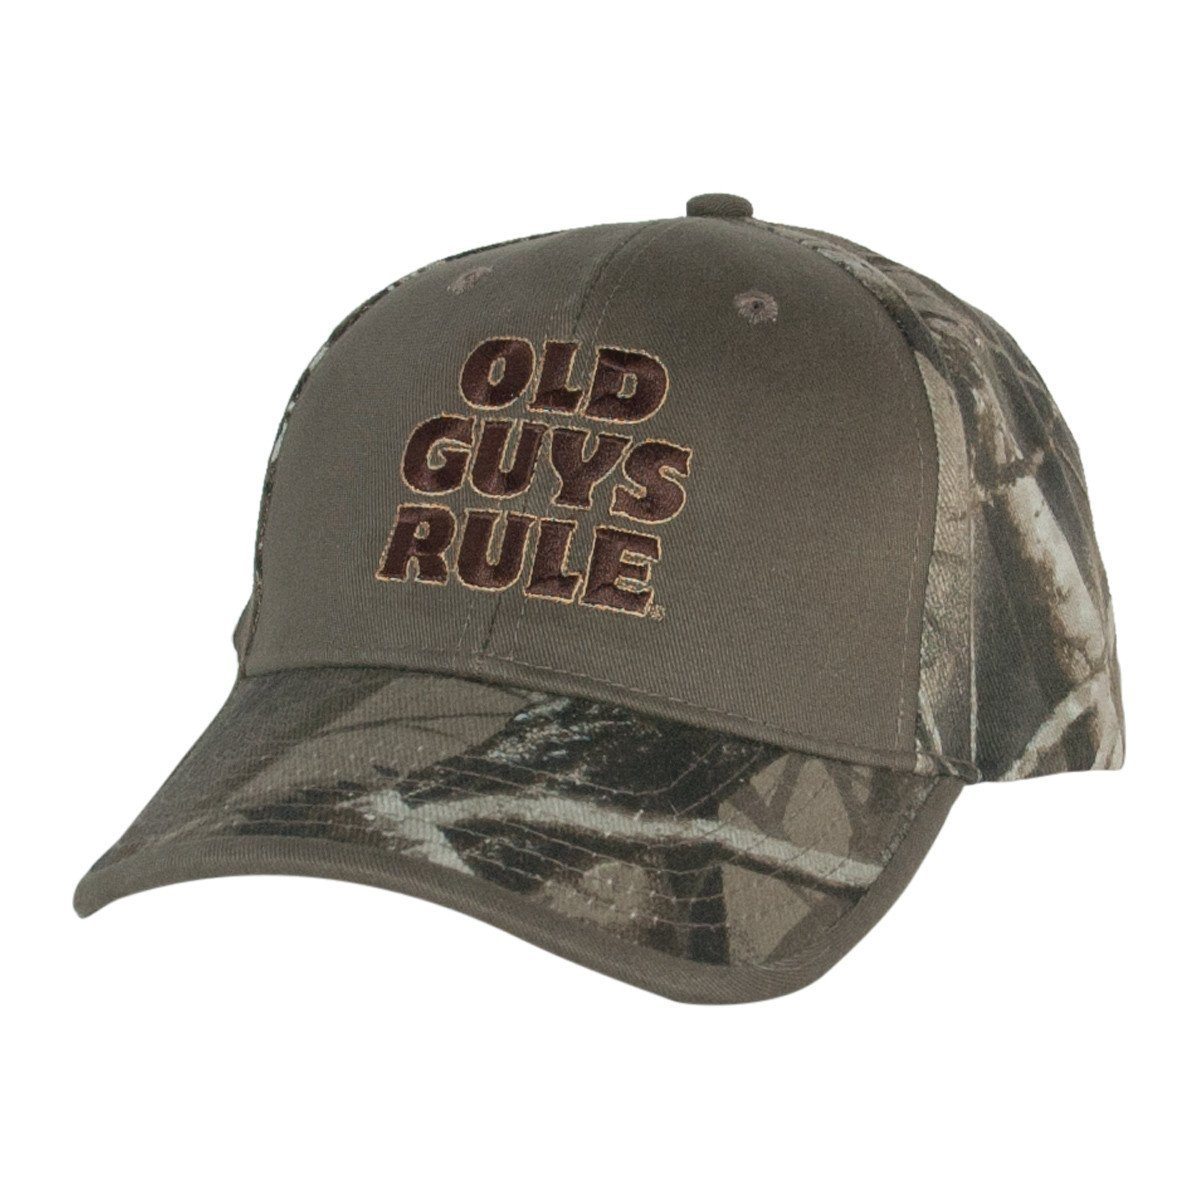 Old Guys Rule Baseball Cap - Camo - Bucks, Trucks and Ducks - Old Guys Rule